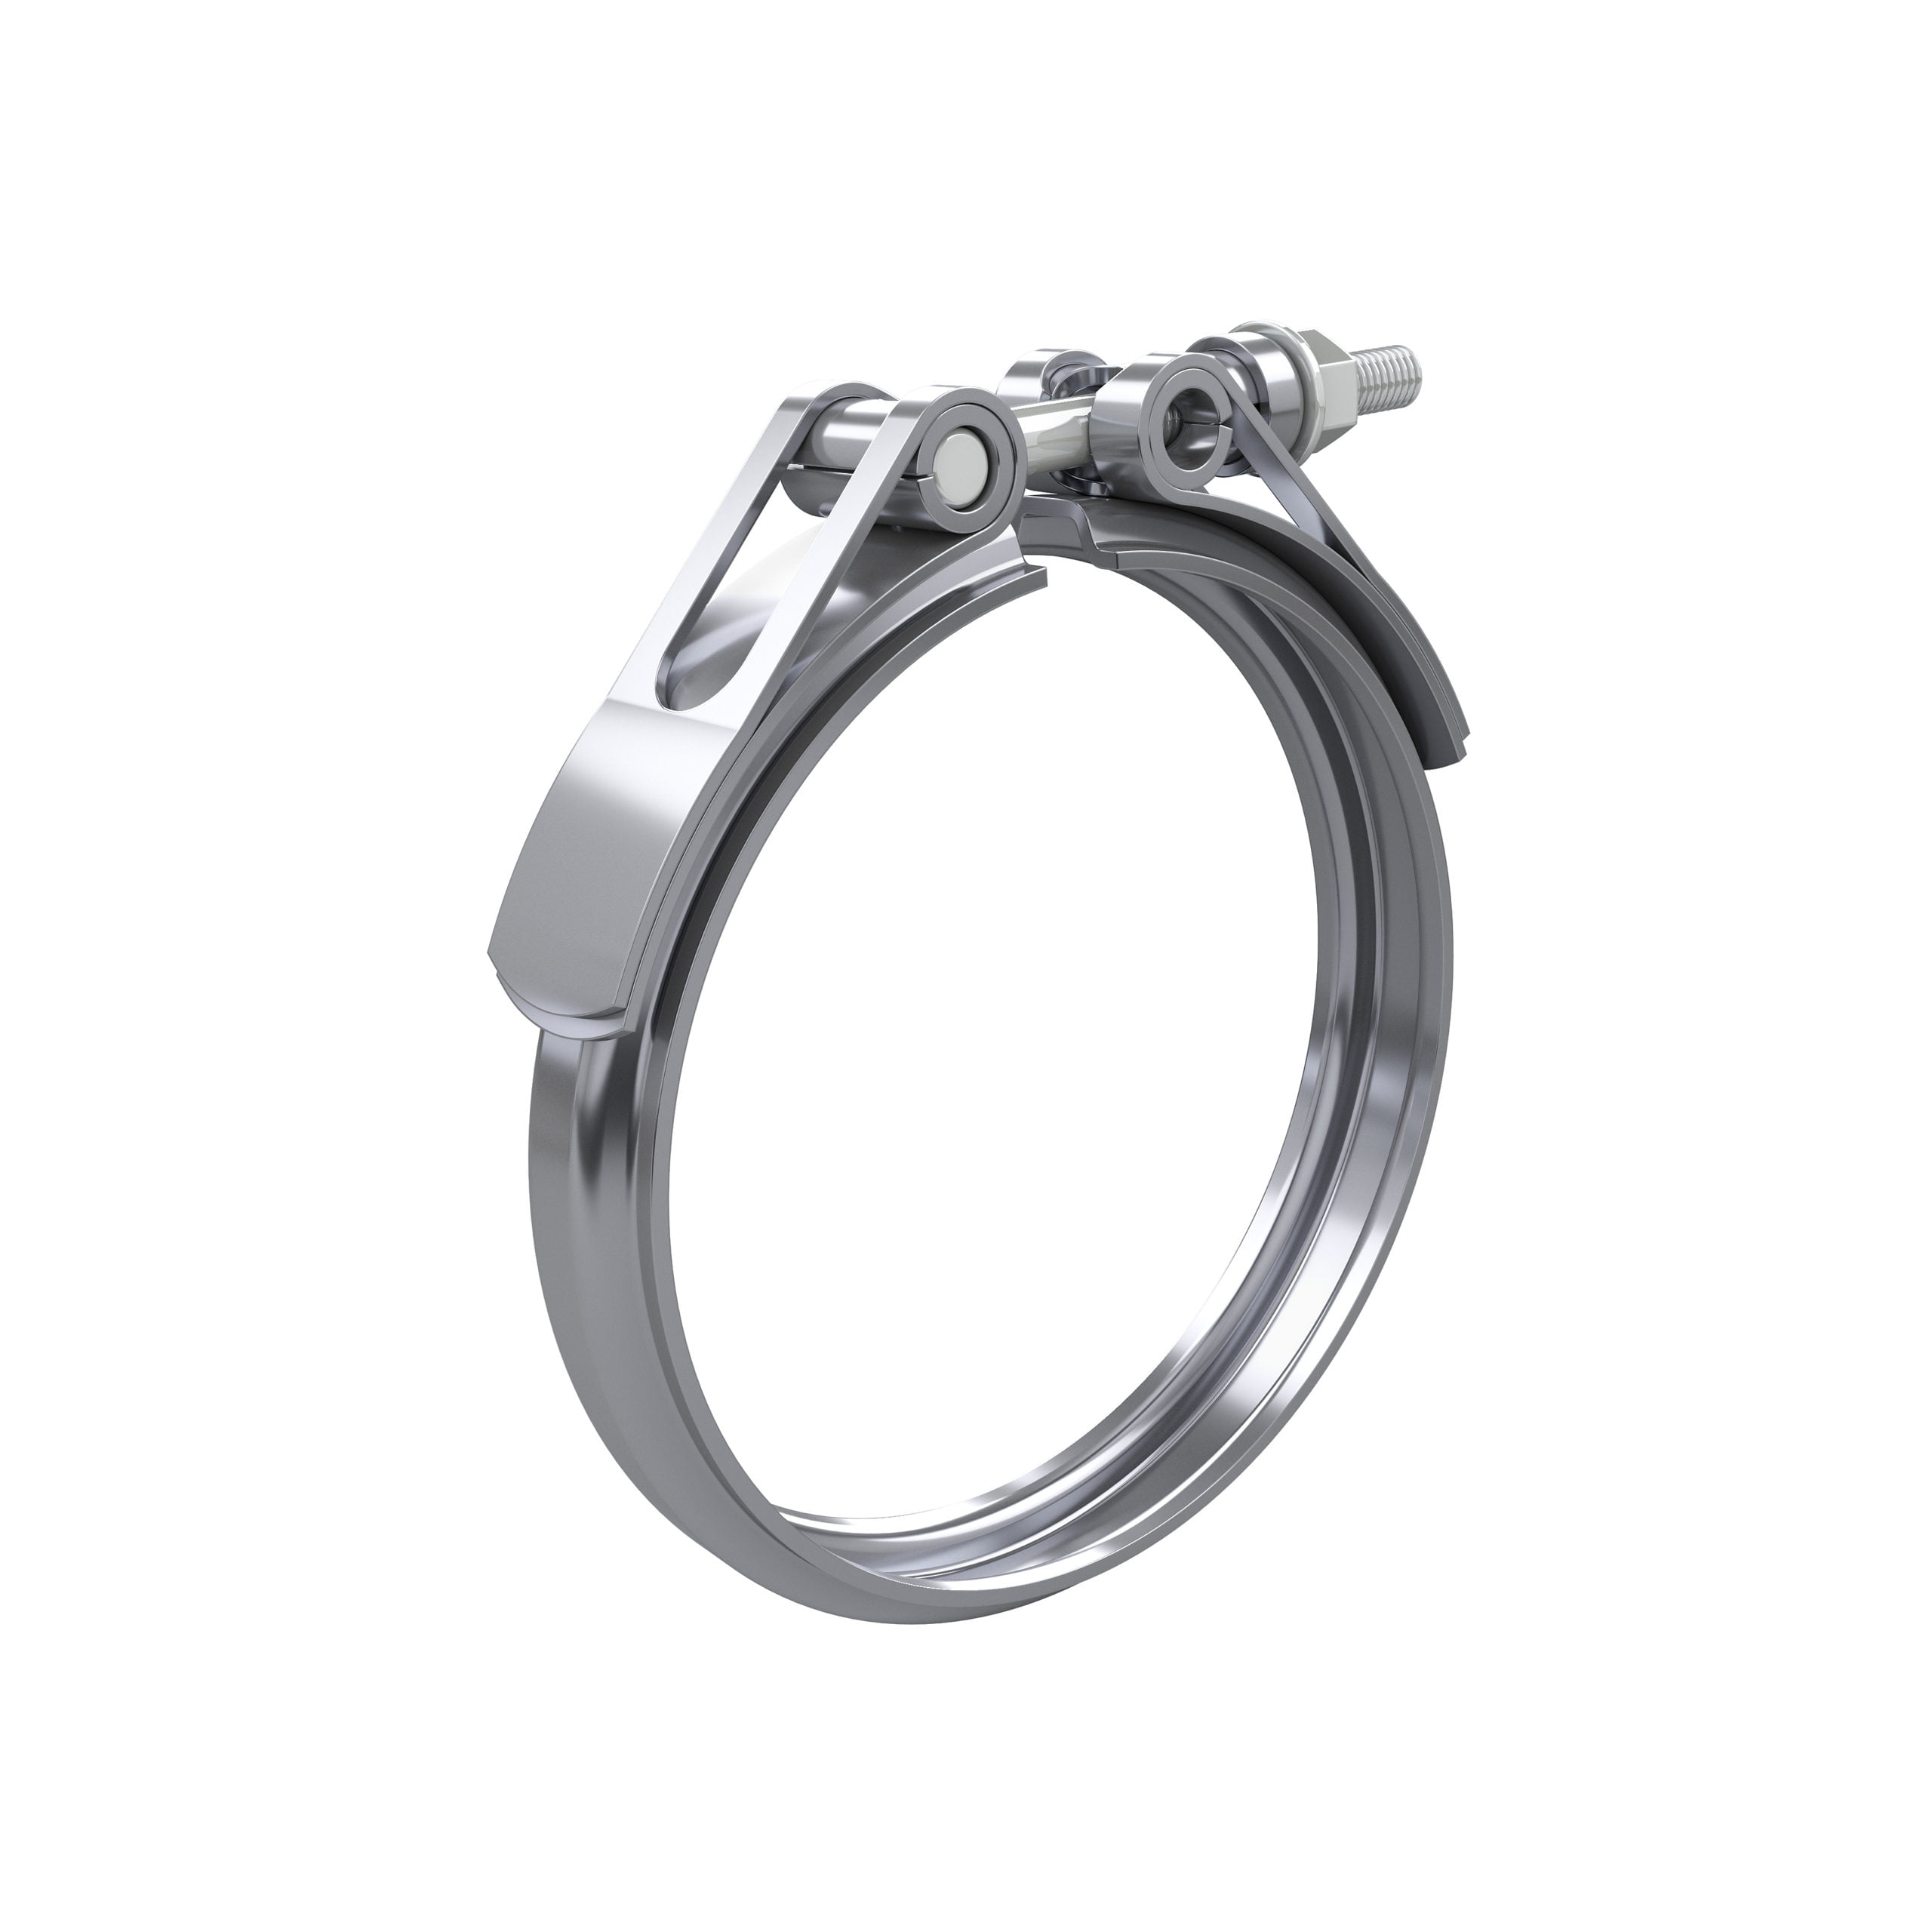 1 segment ring clamp